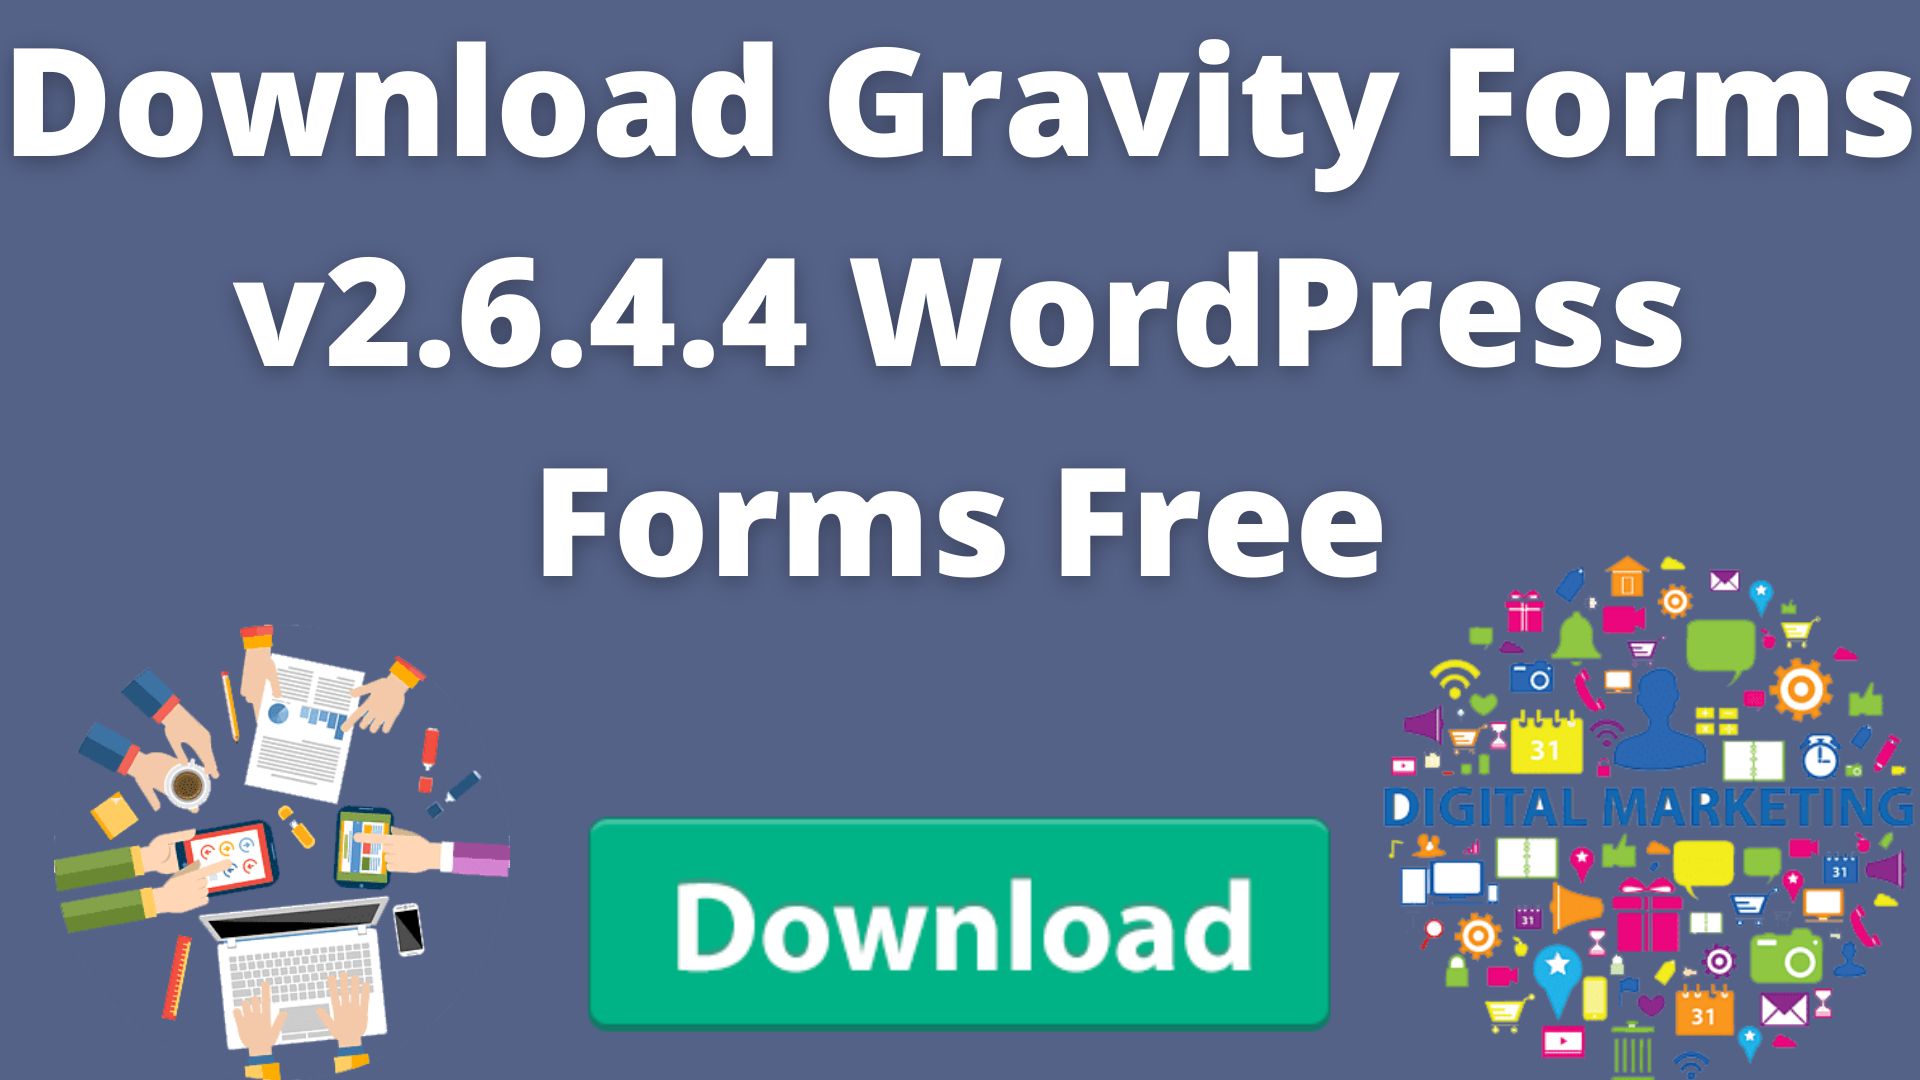 Download gravity forms v2. 6. 4. 4 wordpress forms free